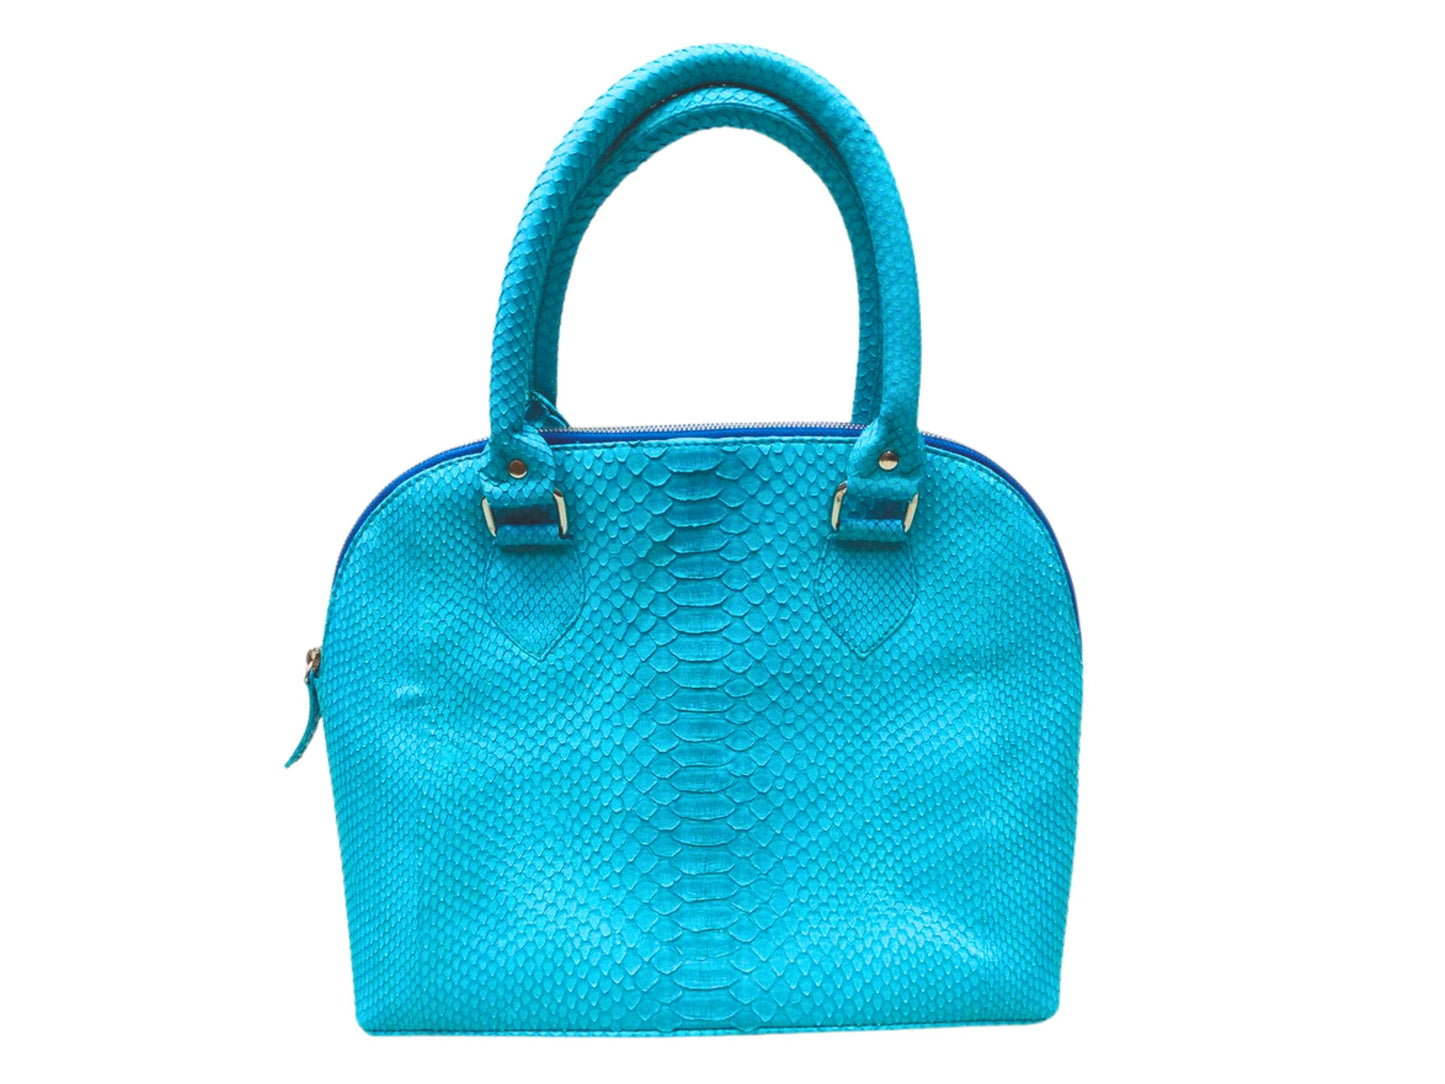 Laptop Bags Snakeskin Tote Laptop Bag,Trendy Work Bag,Fashionable Carryall Aqua Blue Python Jacket by LFM Fashion